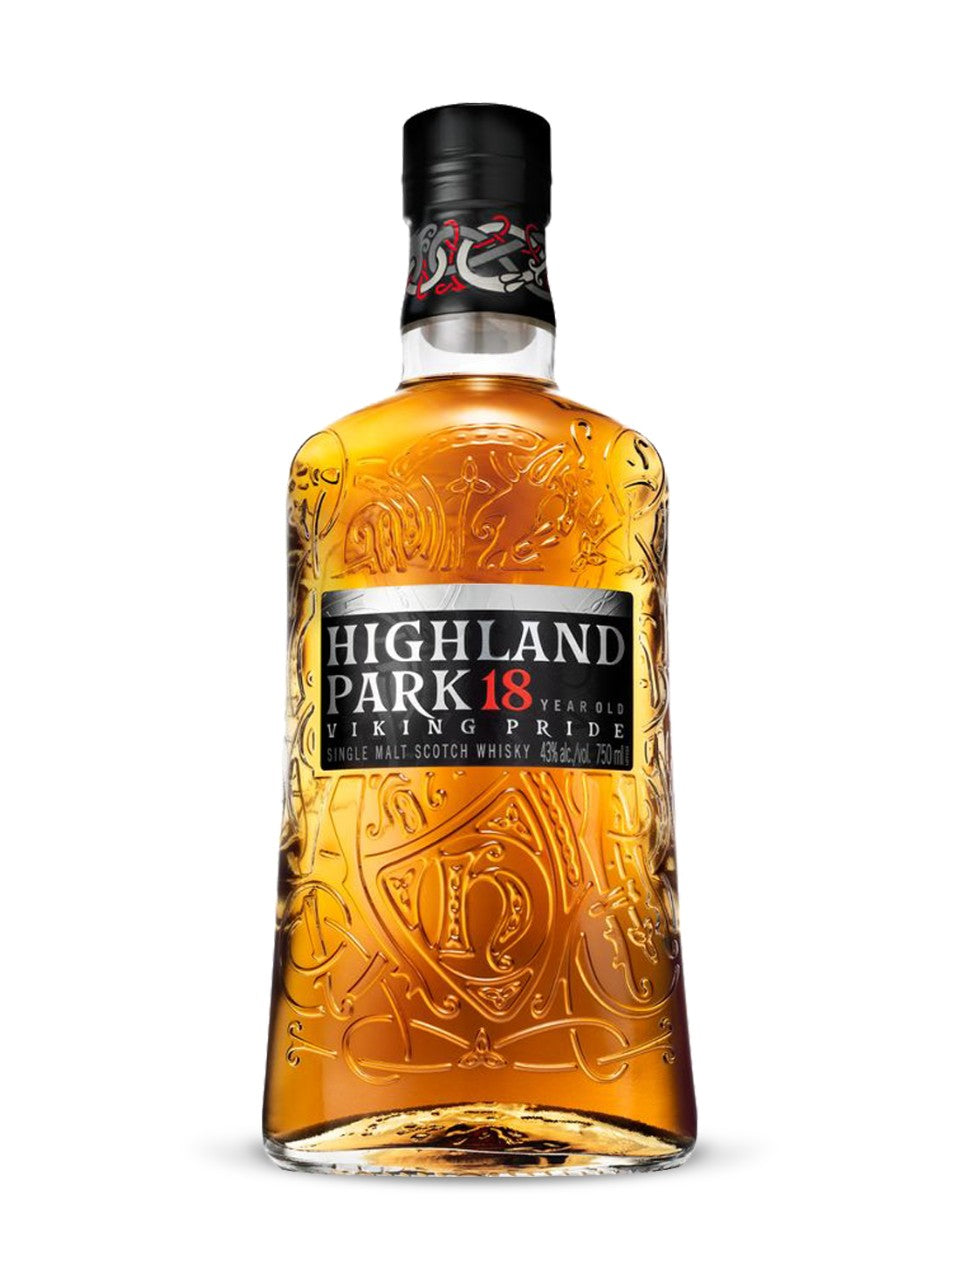 Highland Park 18 Year Old Single Malt Scotch Whisky 750 ml bottle